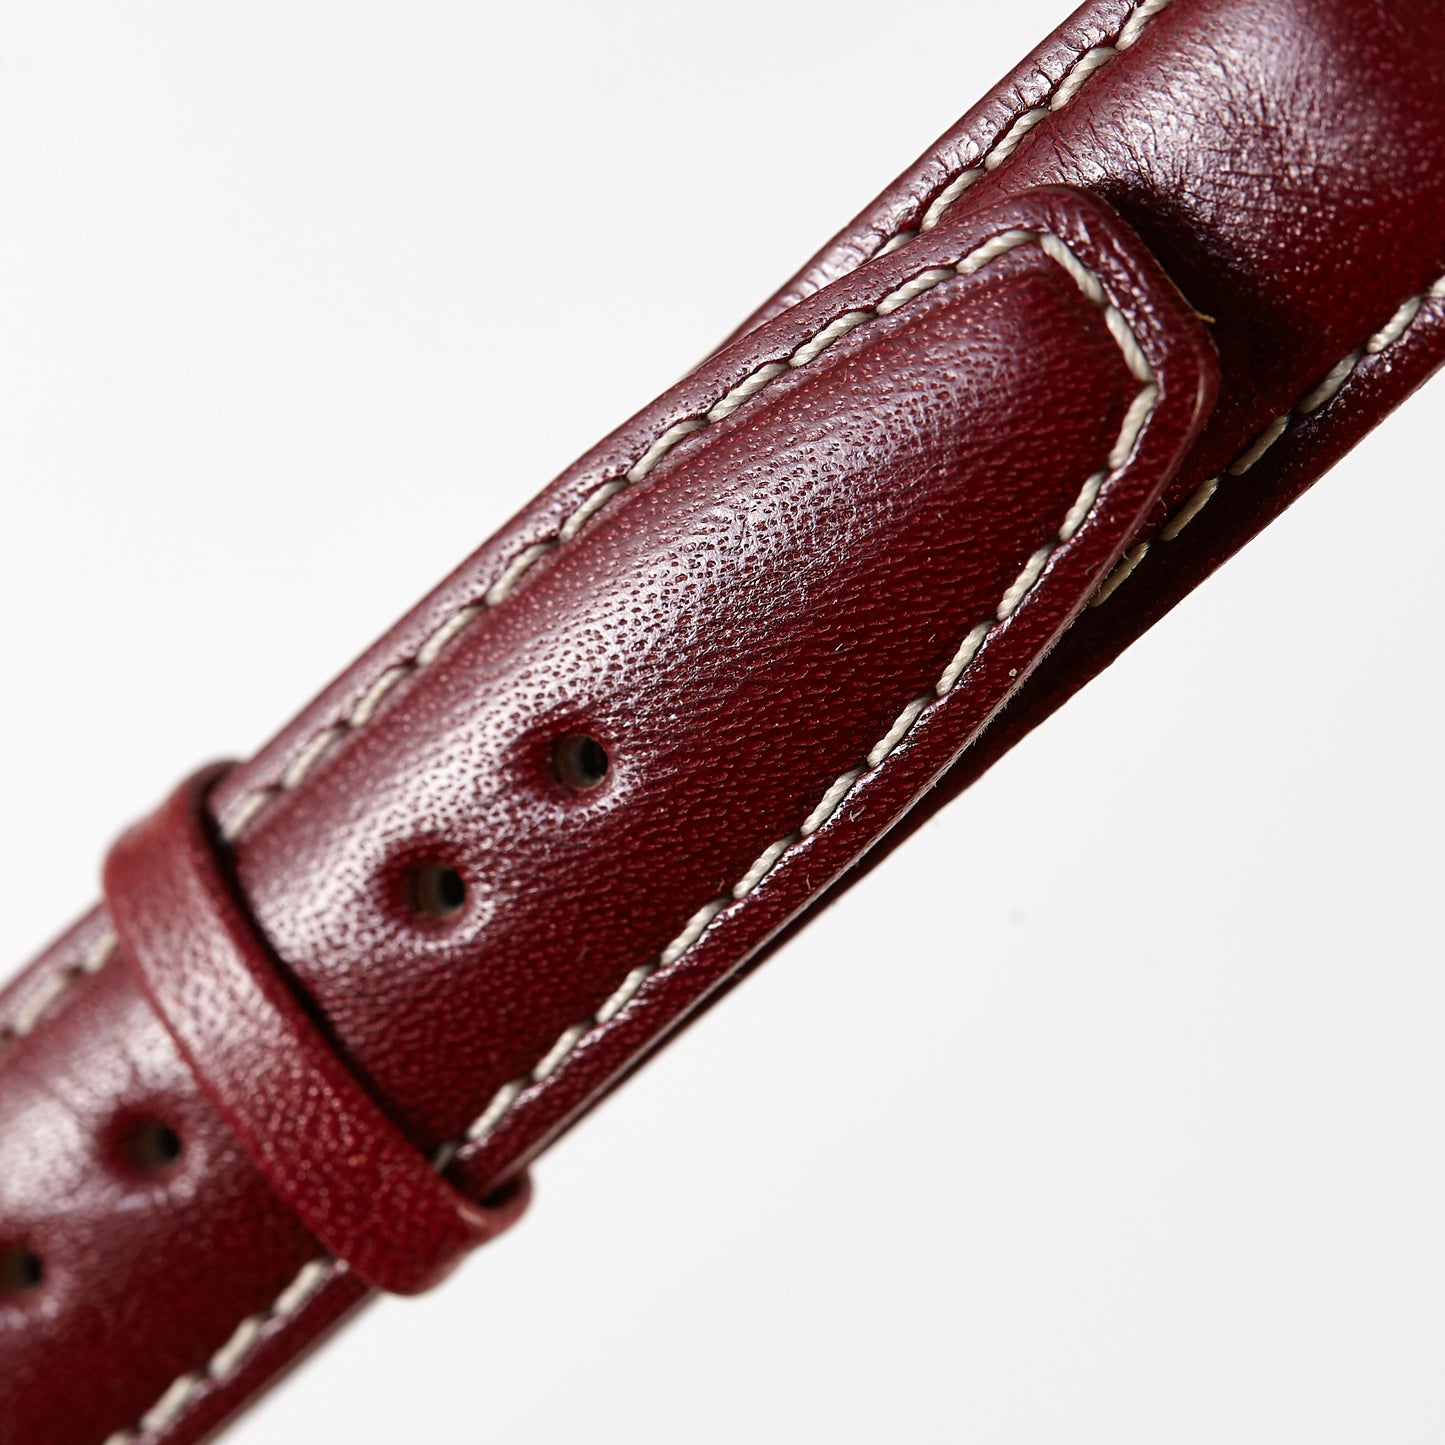 Ecclissi 16mm x 16mm Burgundy Leather Strap 22190 80115